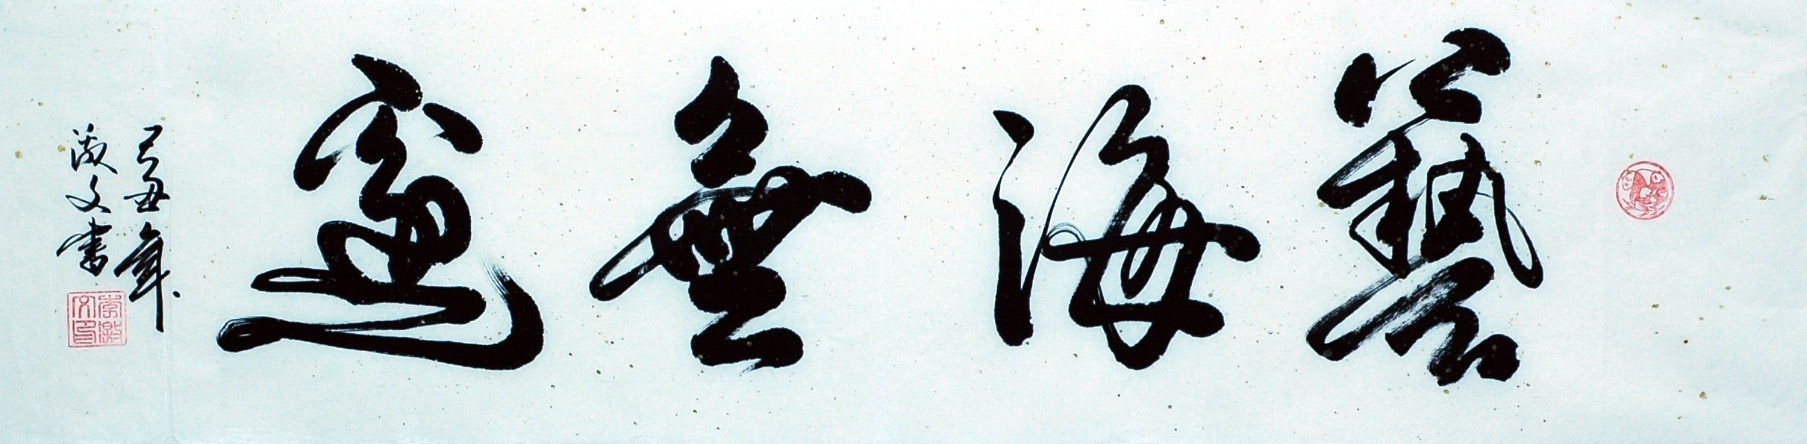 Chinese Cursive Scripts Painting - CNAG007216